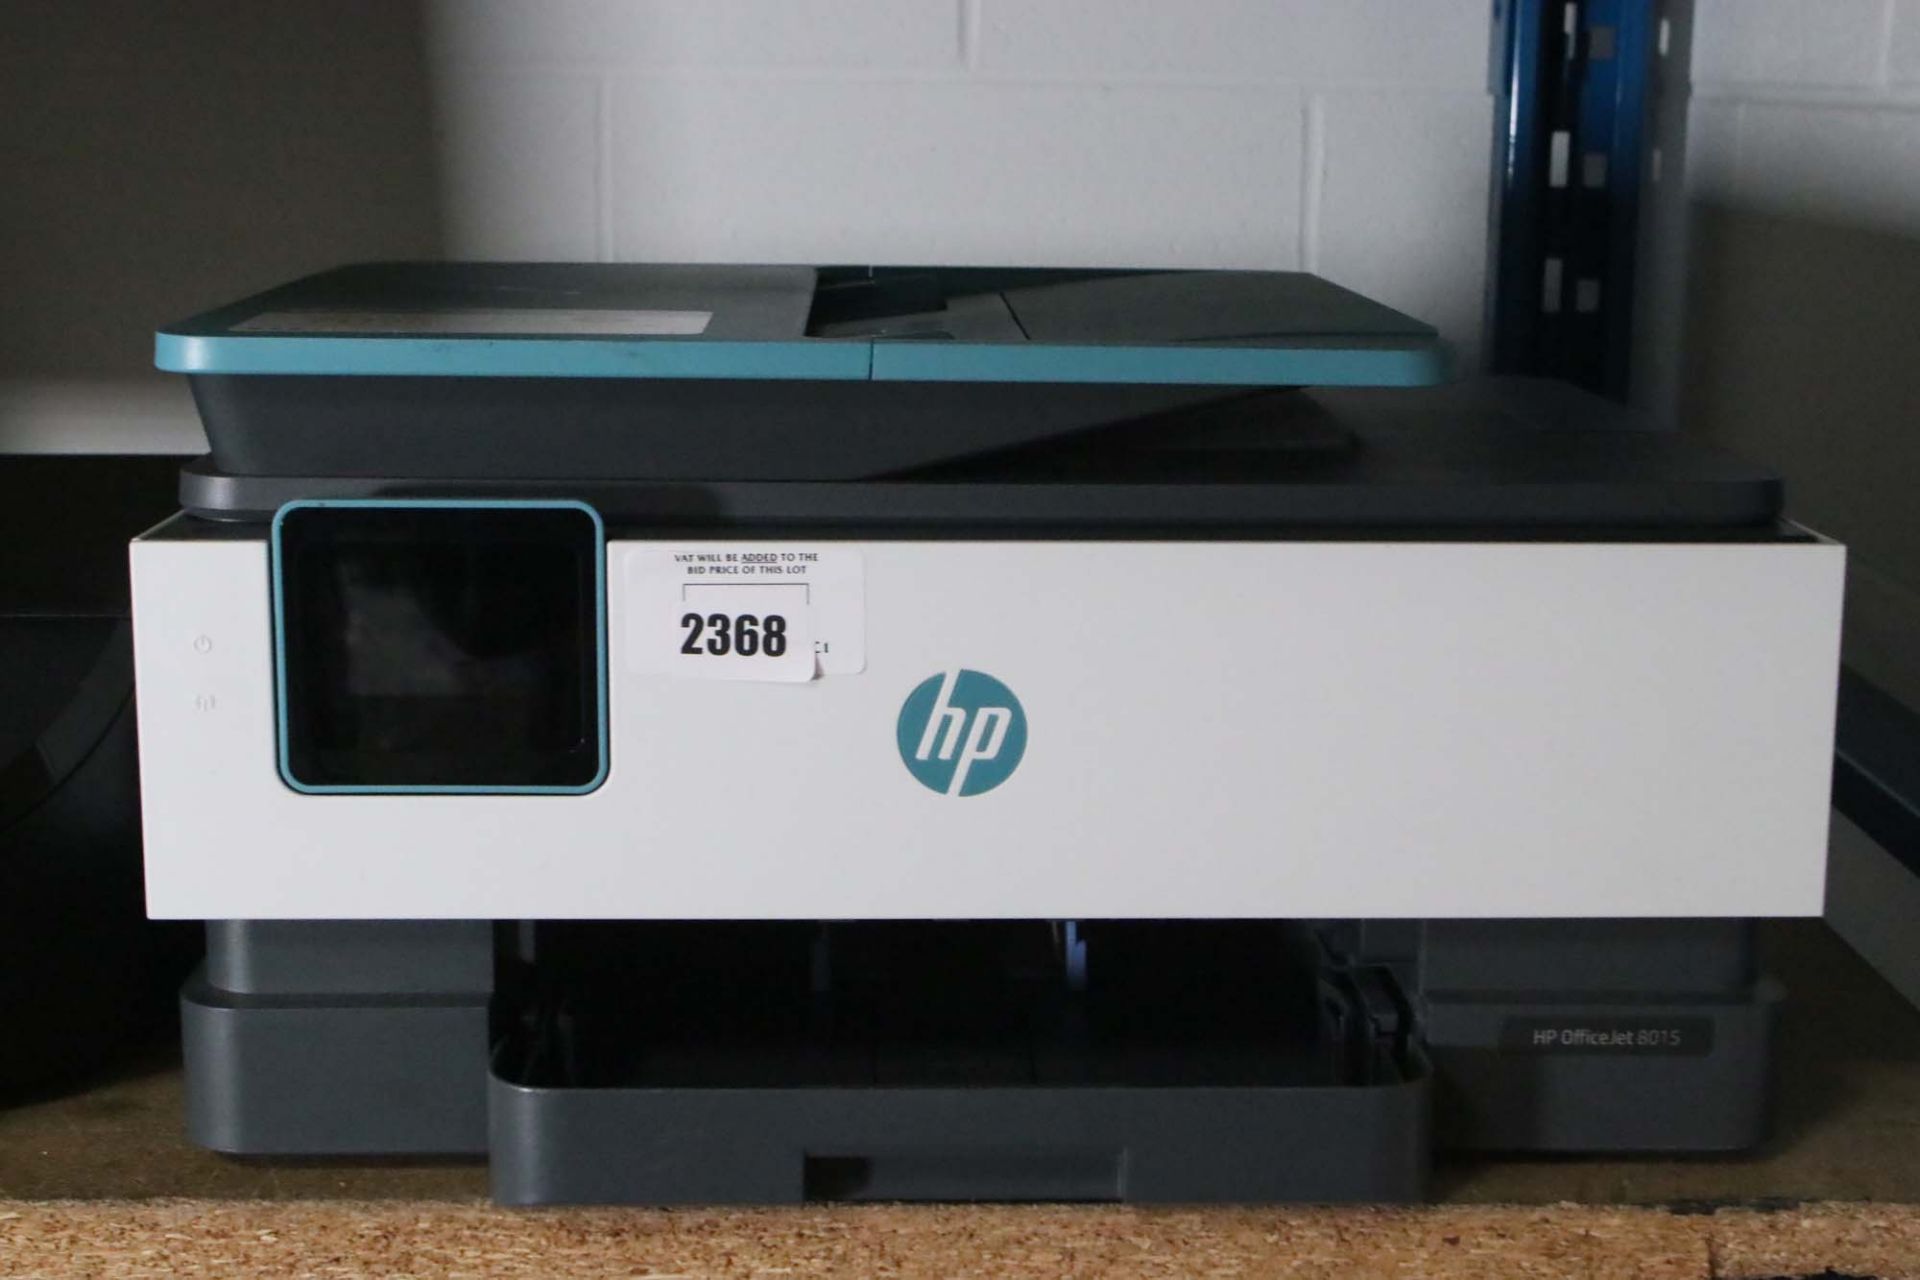 HP Officejet 8015 all in 1 printer